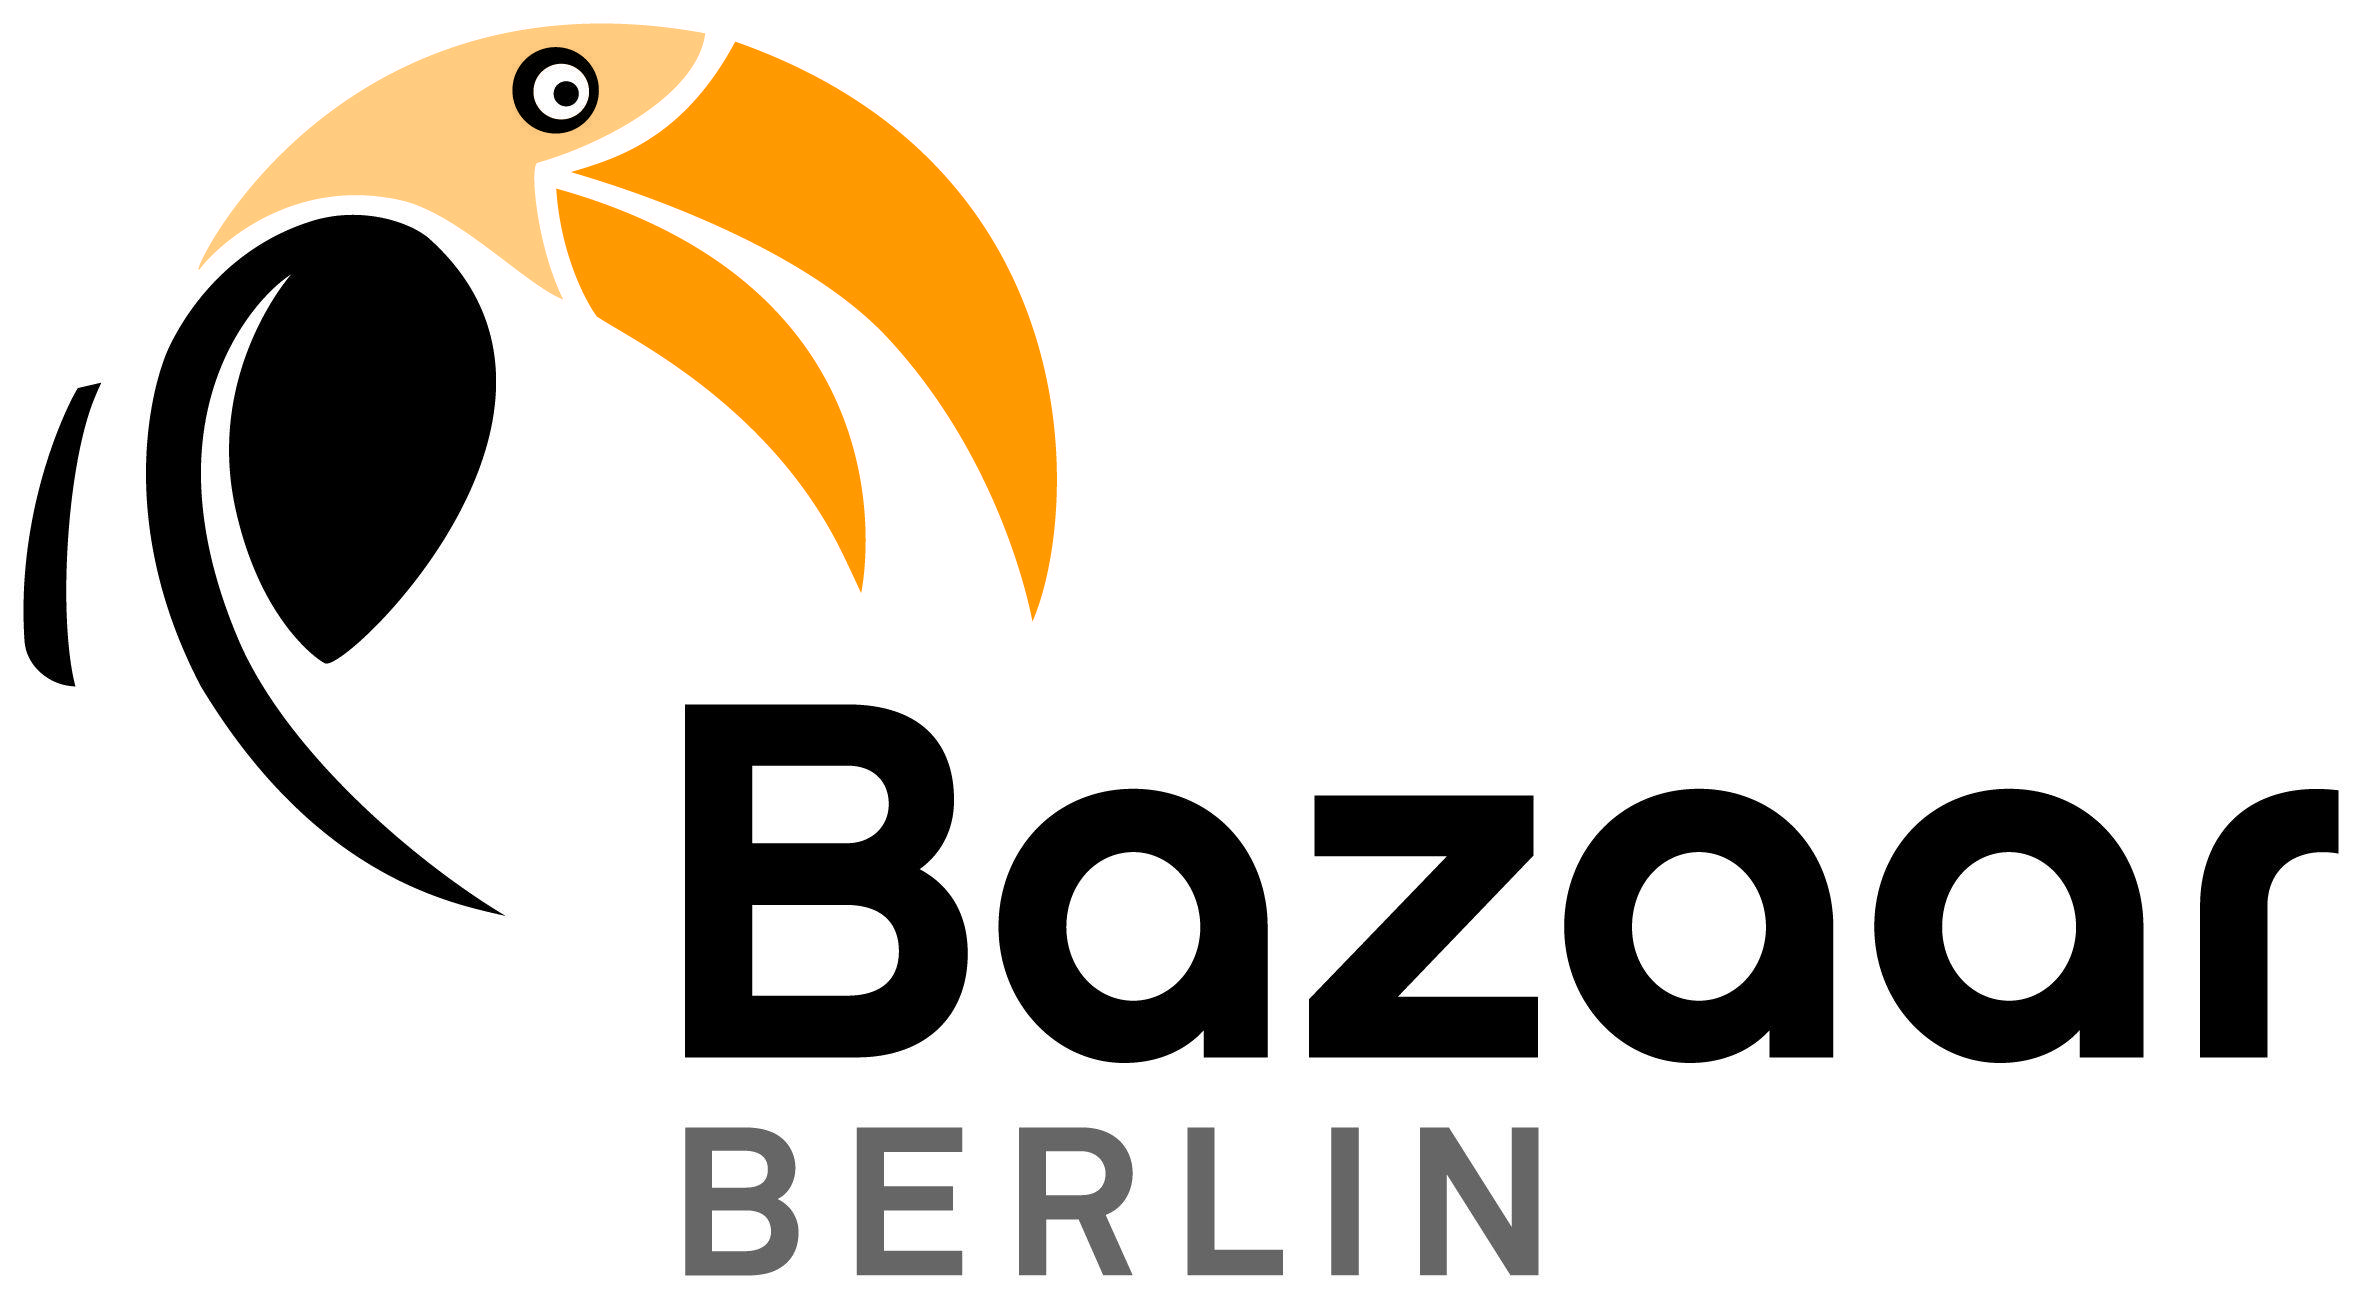 Berlon Logo - Bazaar Berlin - Logos